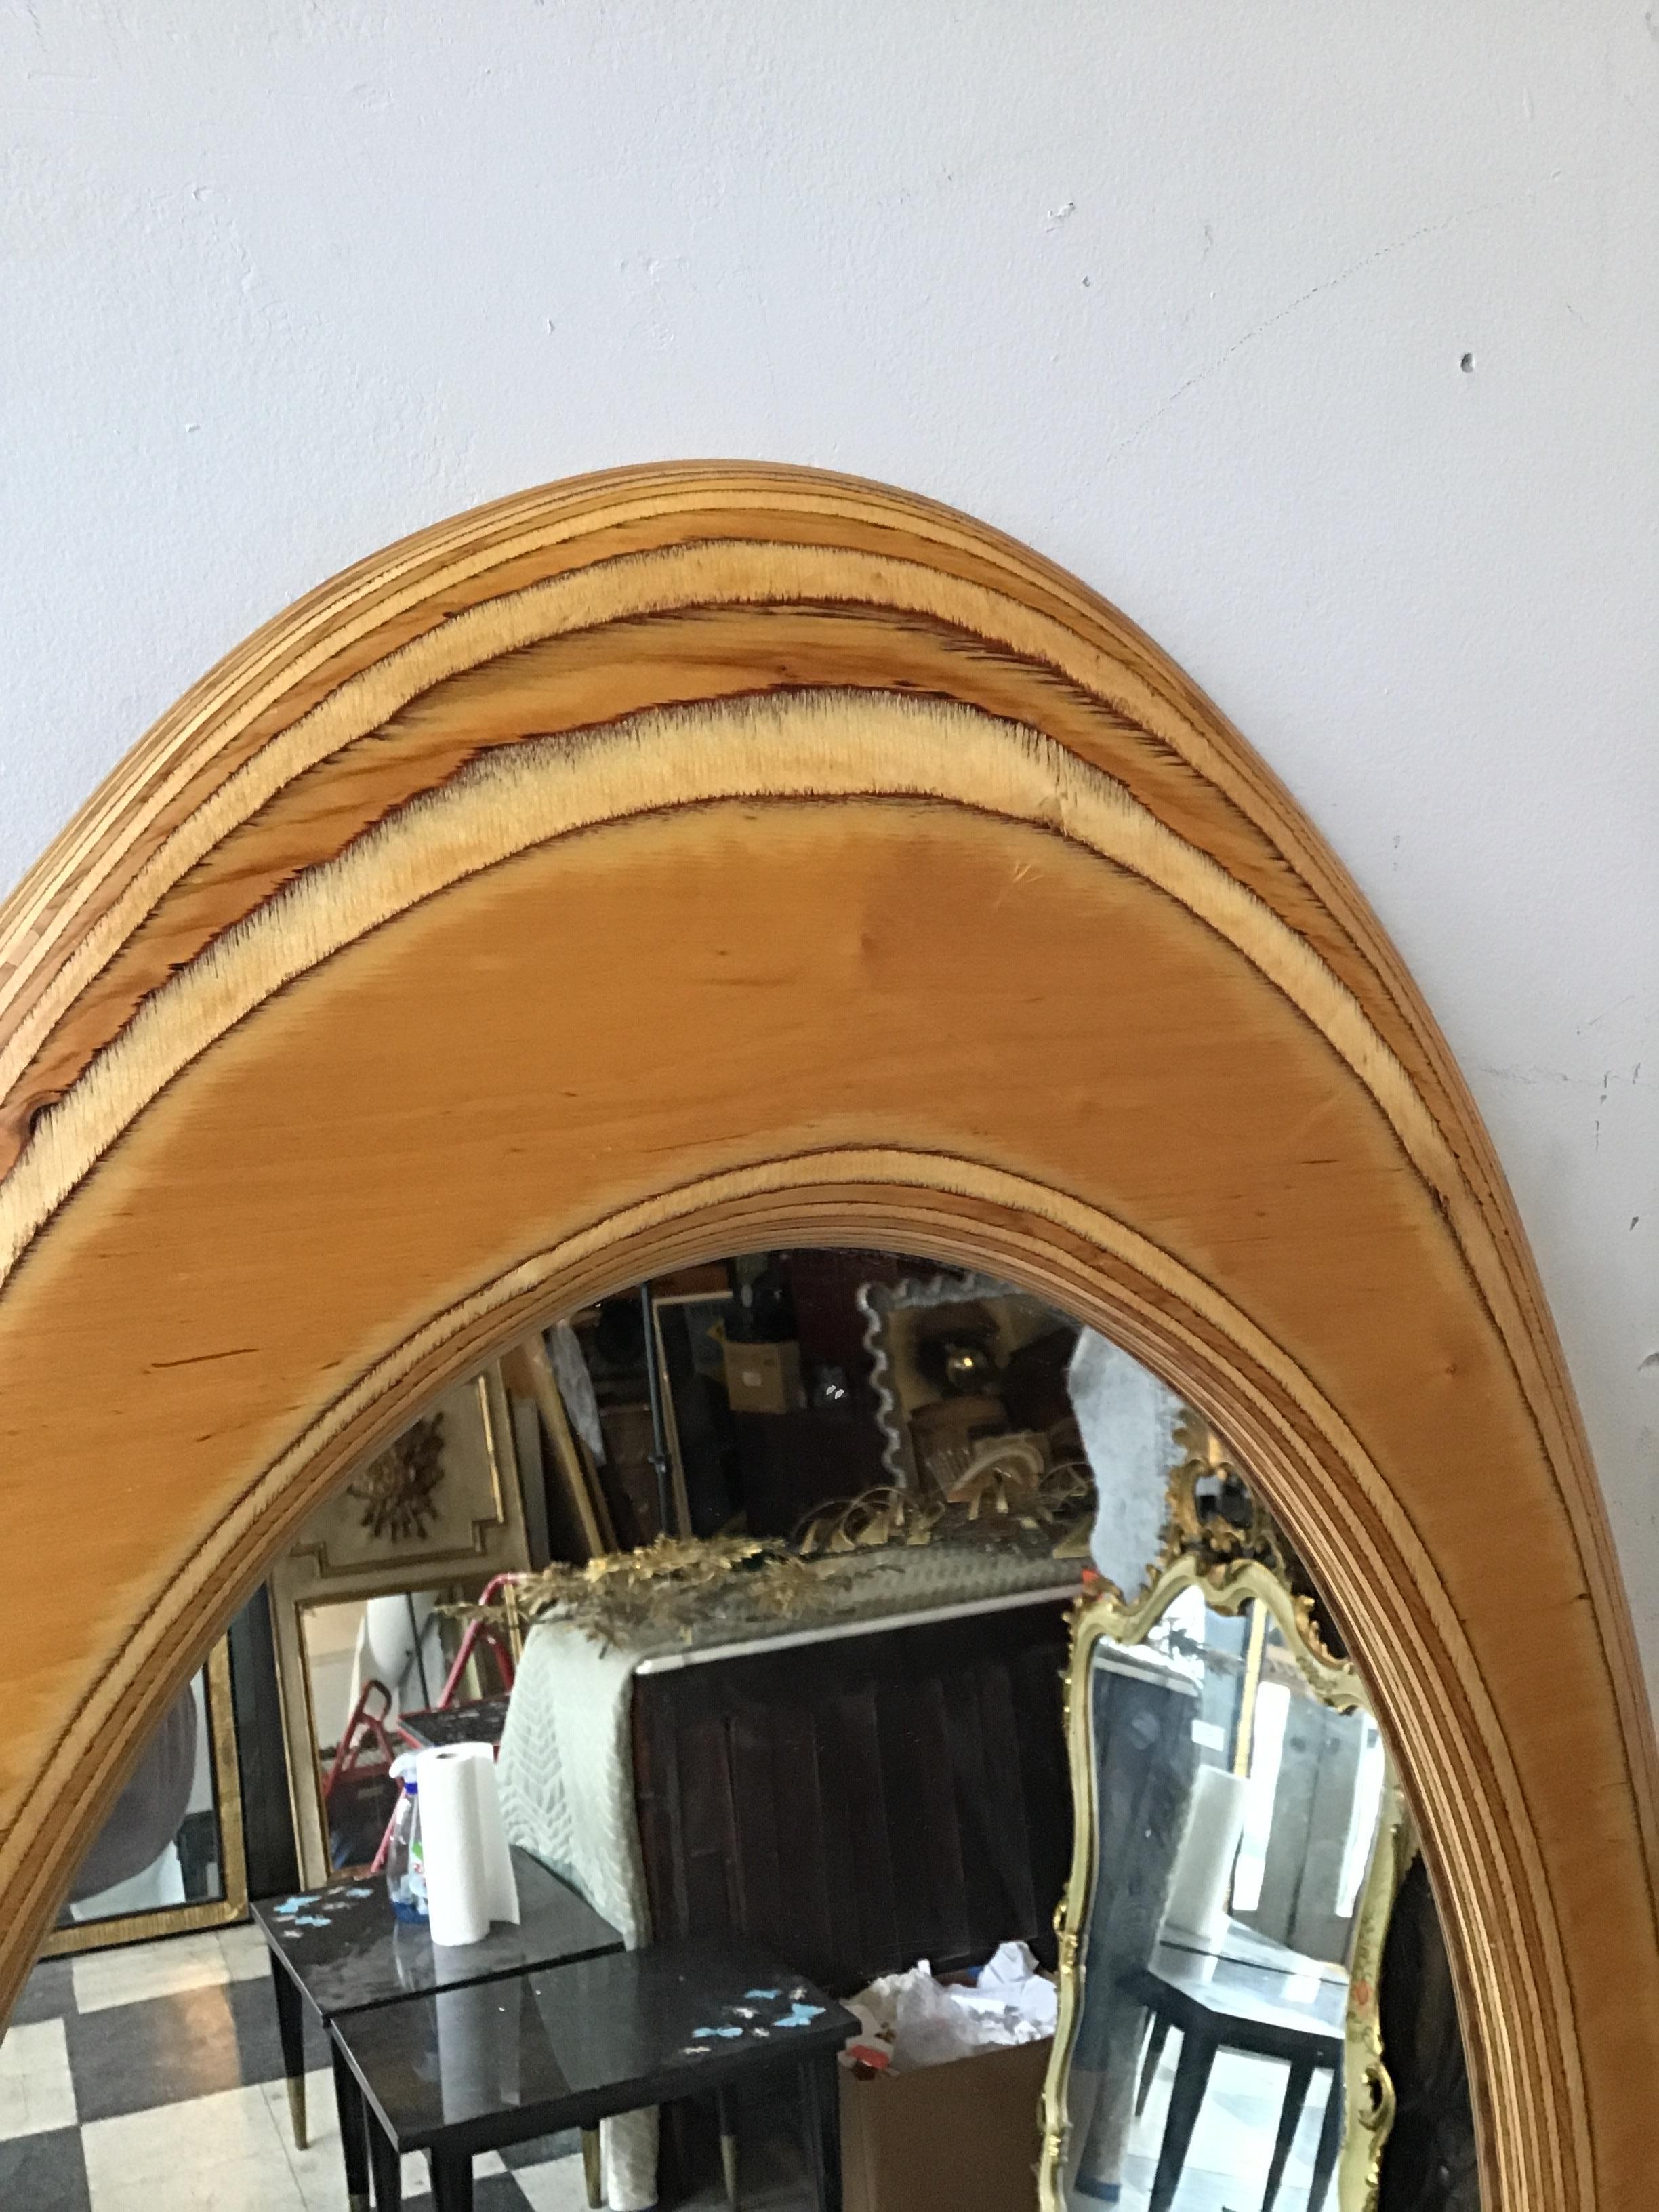 oval wood mirror